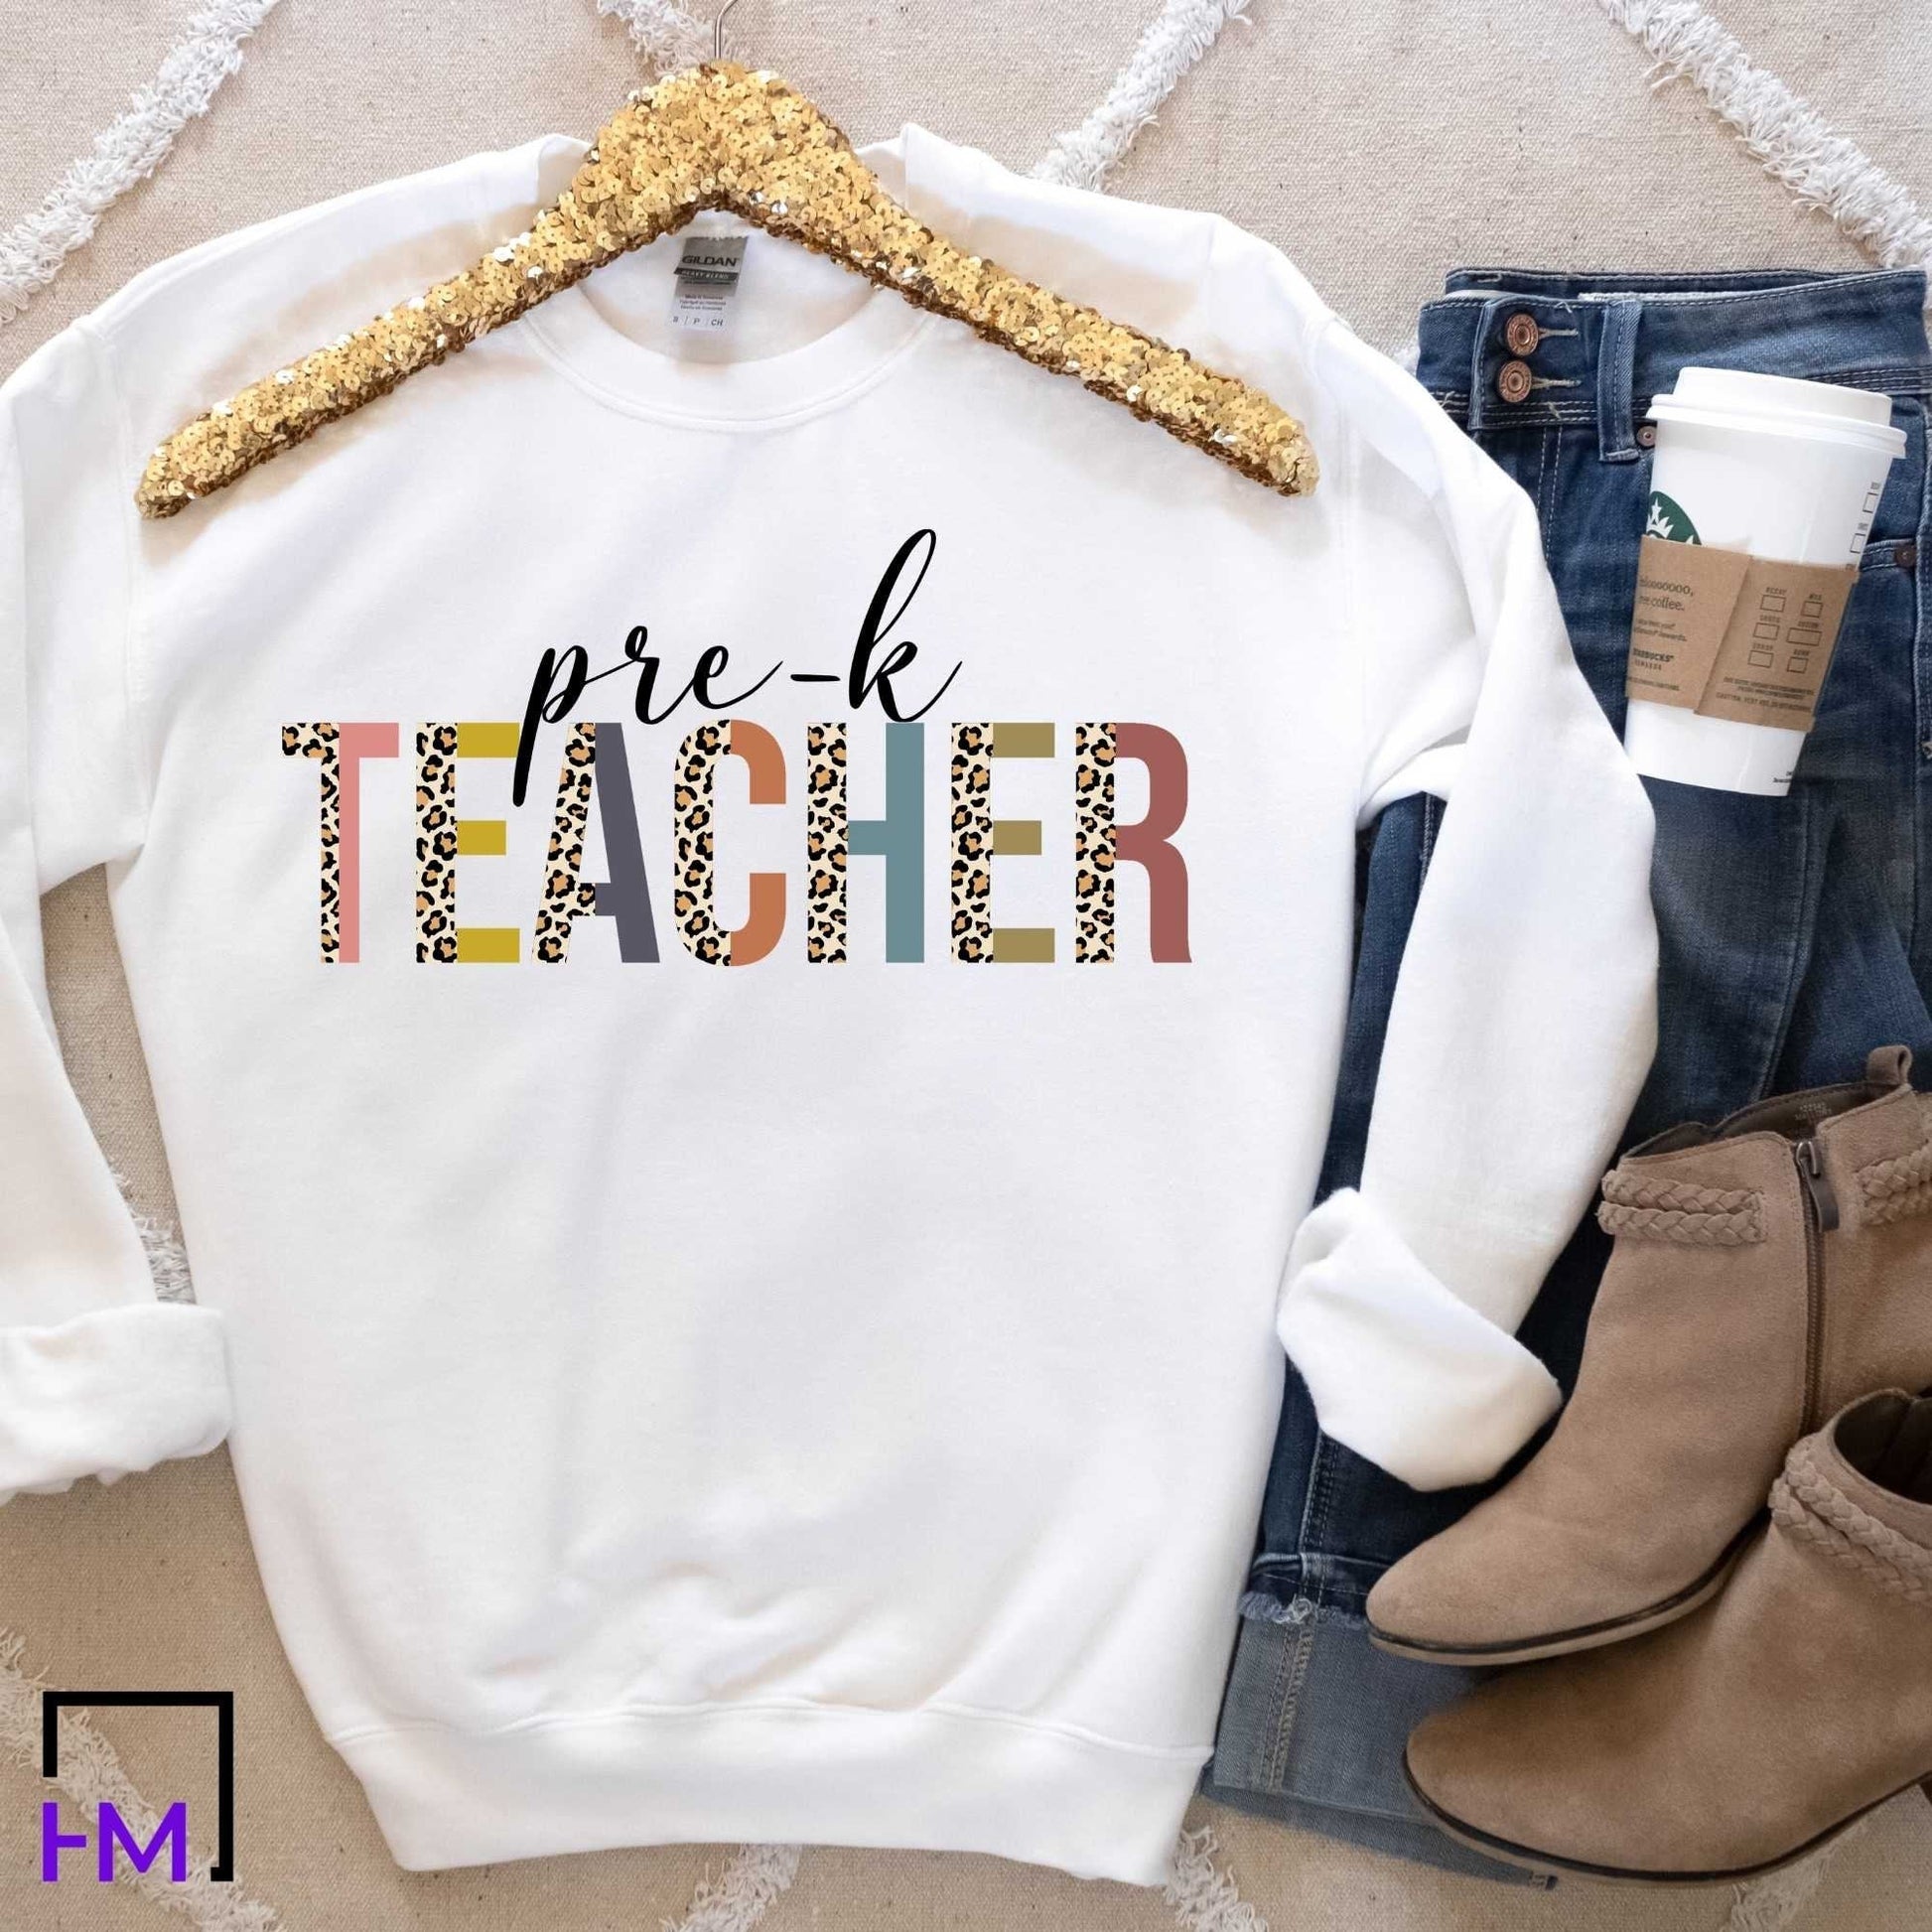 Pre-K Teacher Shirt